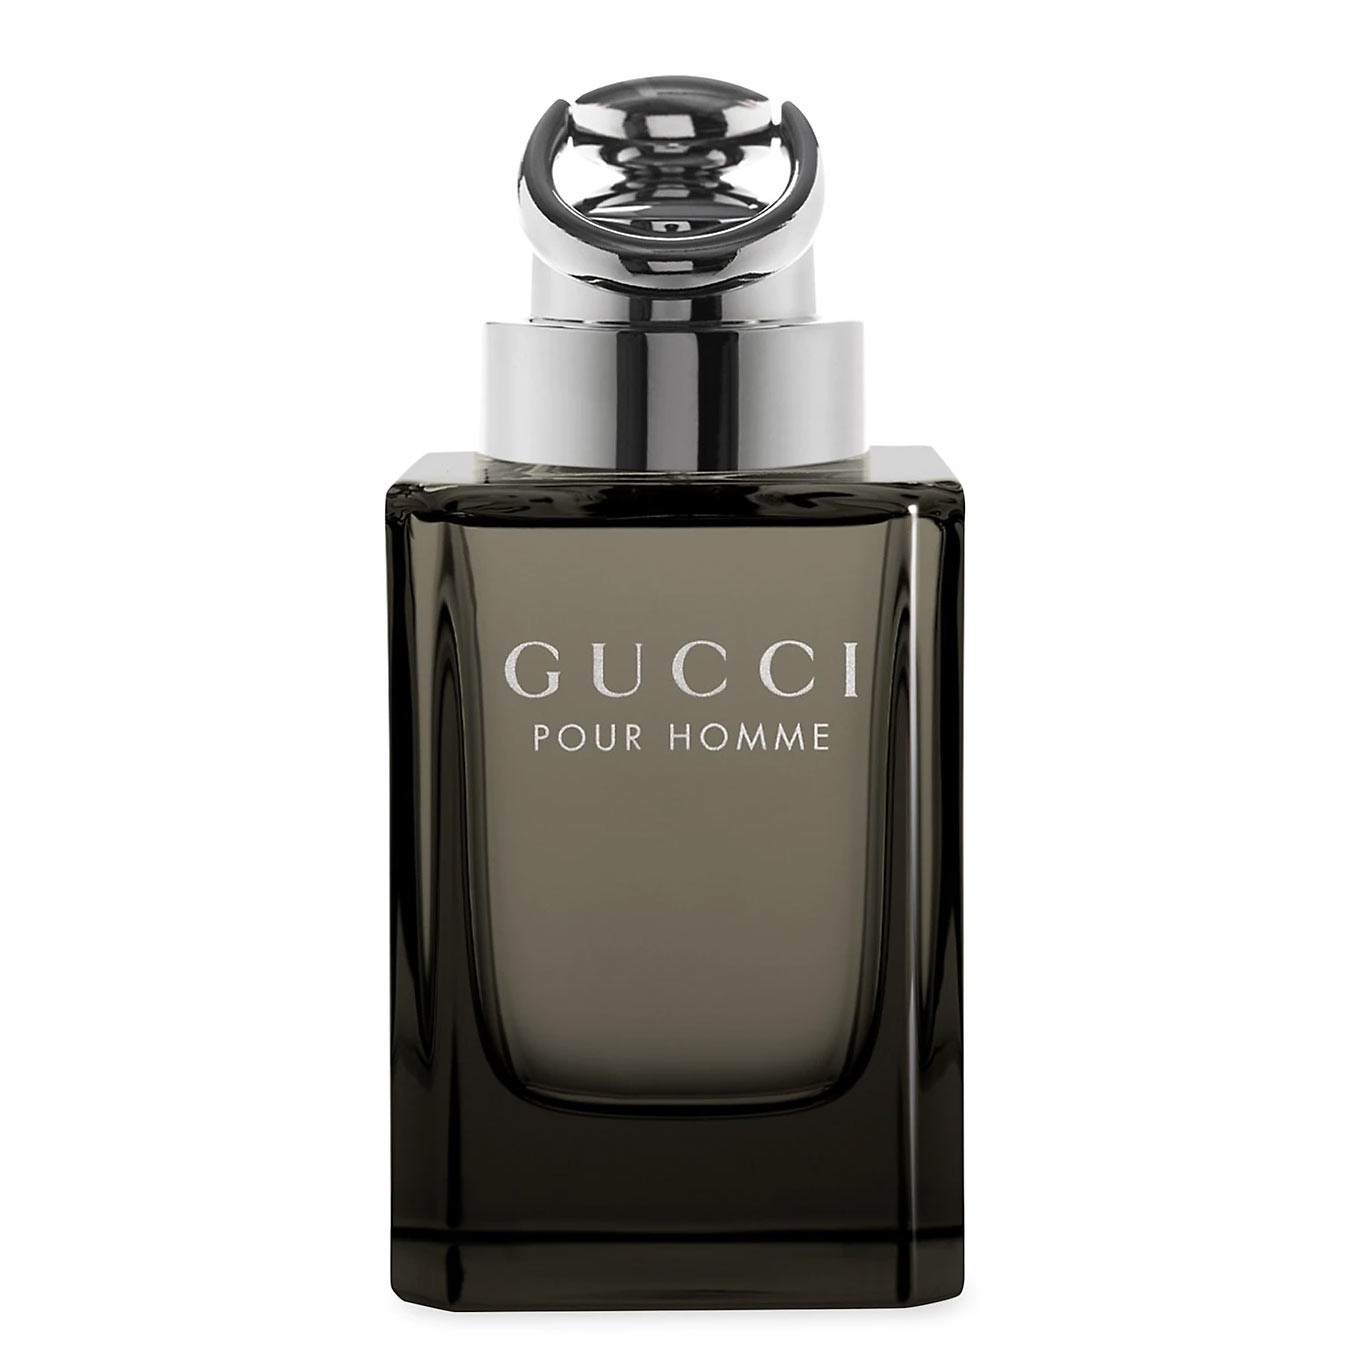 Springen Controverse Afscheiden Gucci by Gucci Cologne by Gucci @ Perfume Emporium Fragrance